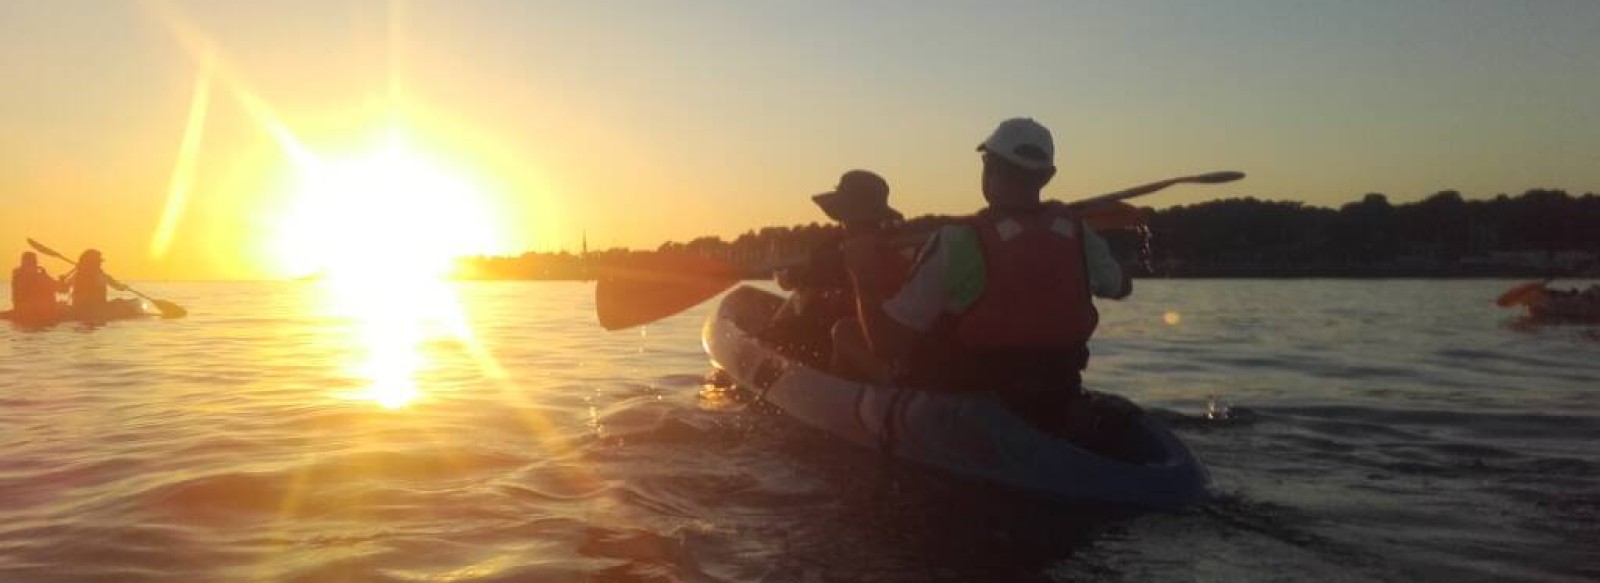 Balade en kayak au coucher de soleil a Pornic